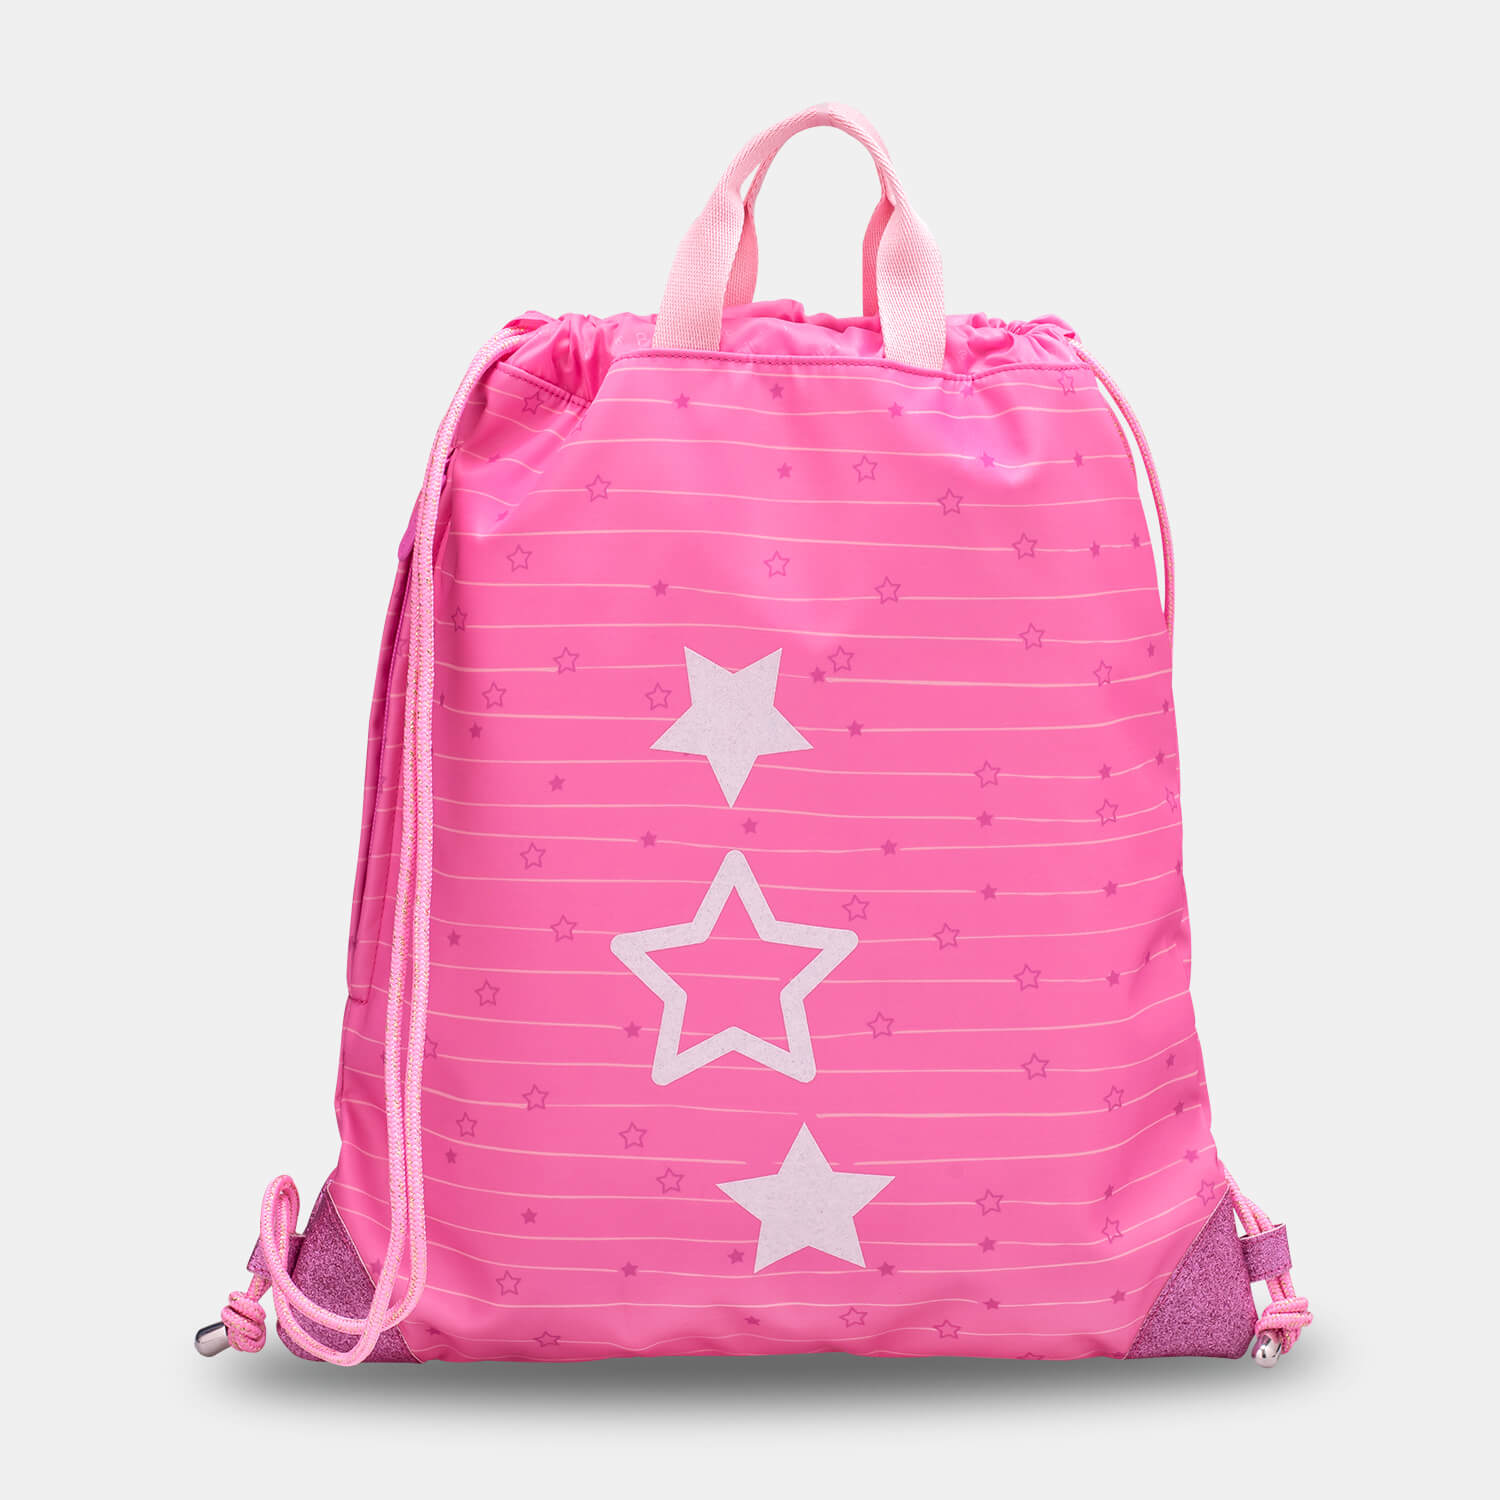 Petite Premium Shoulder bag Candy with GRATIS Gym bag